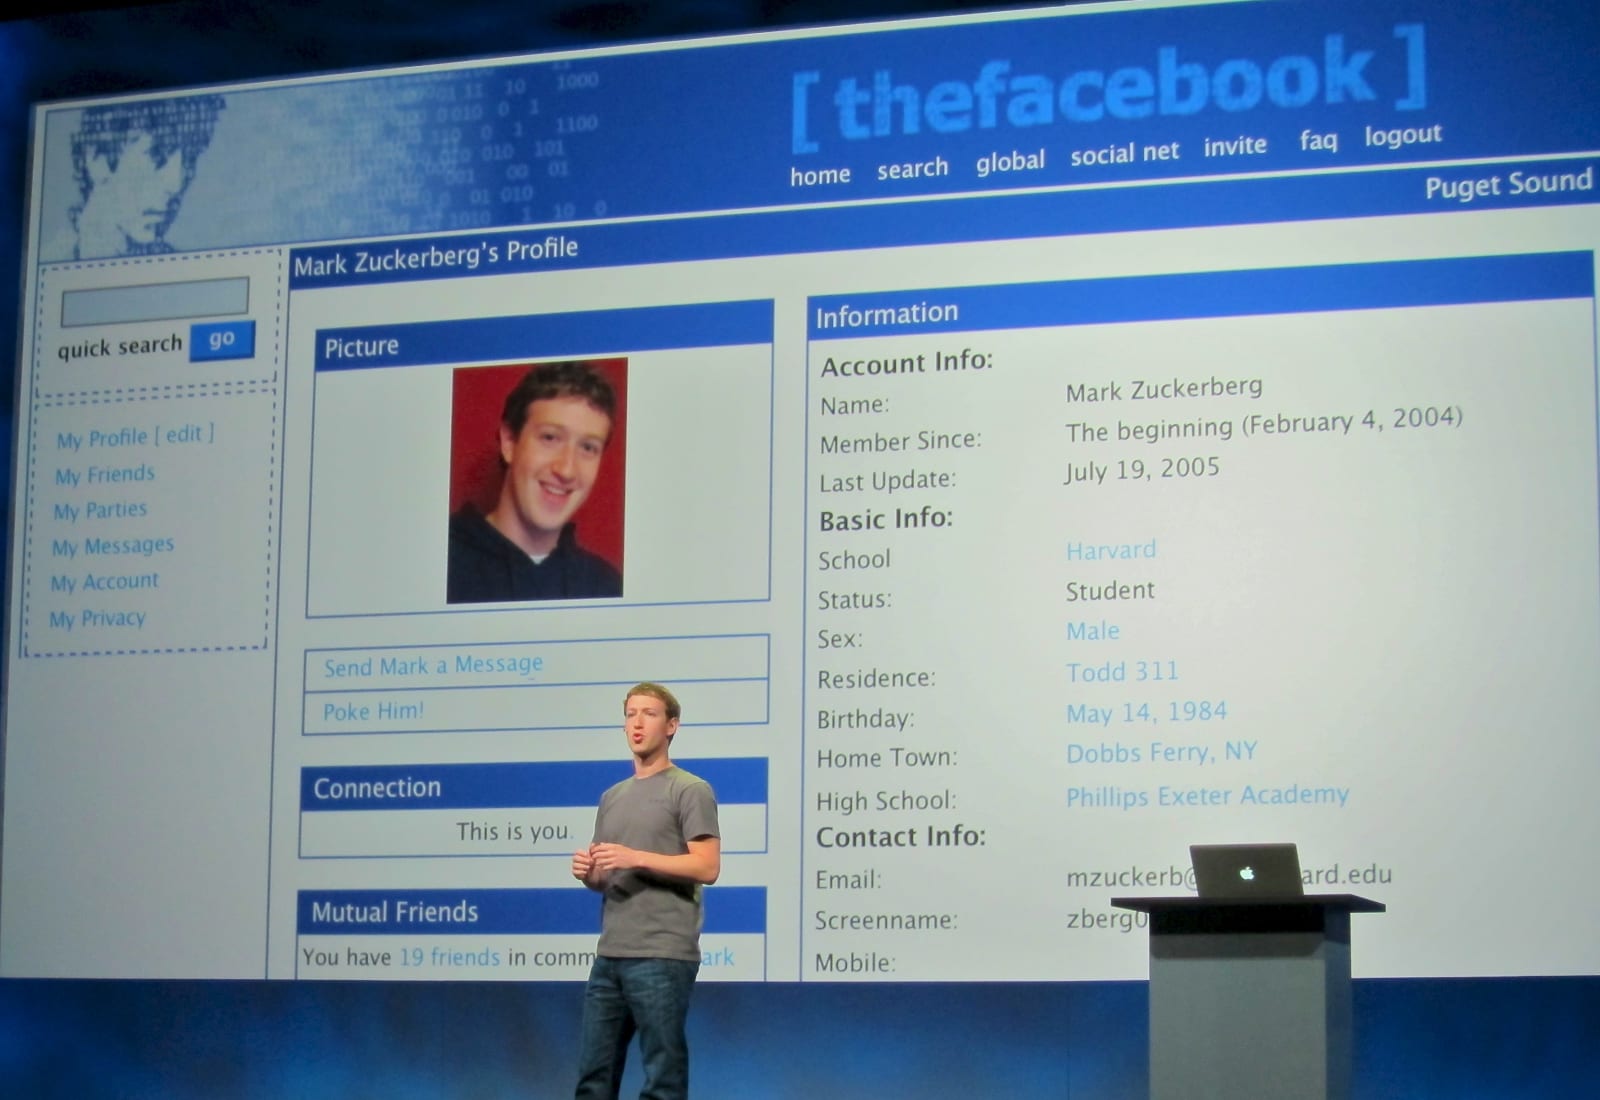 Mark Zuckerberg's original Facebook profile